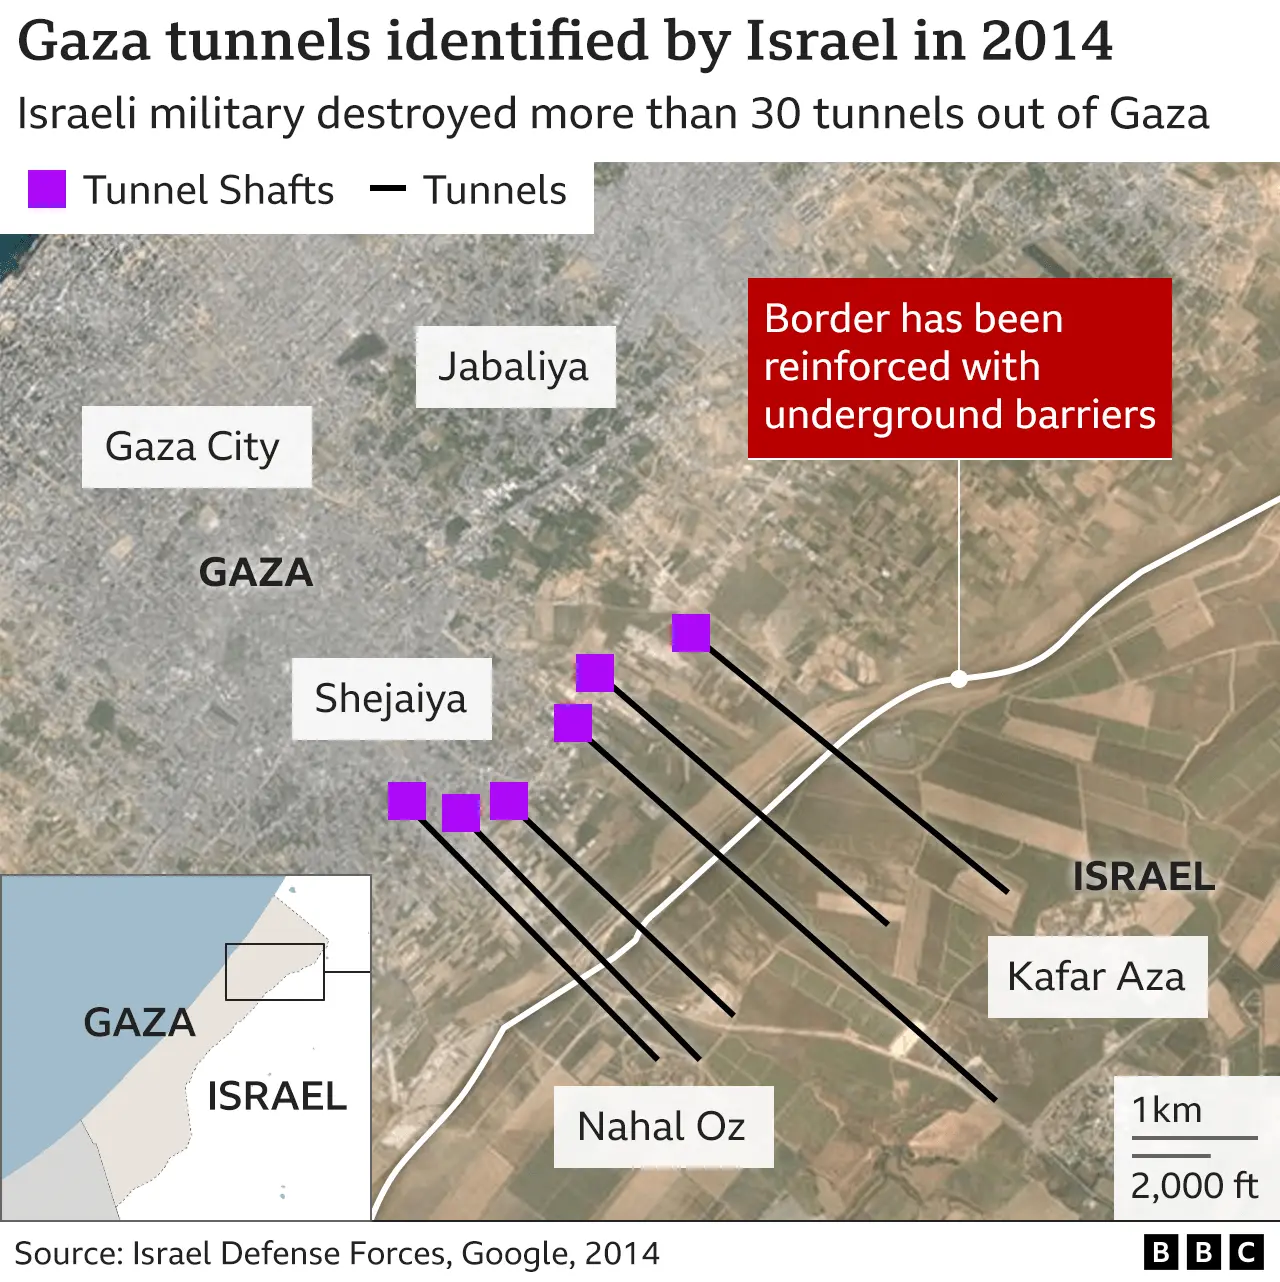 Gaza cross-border tunnels identified by Israeli military in 2014